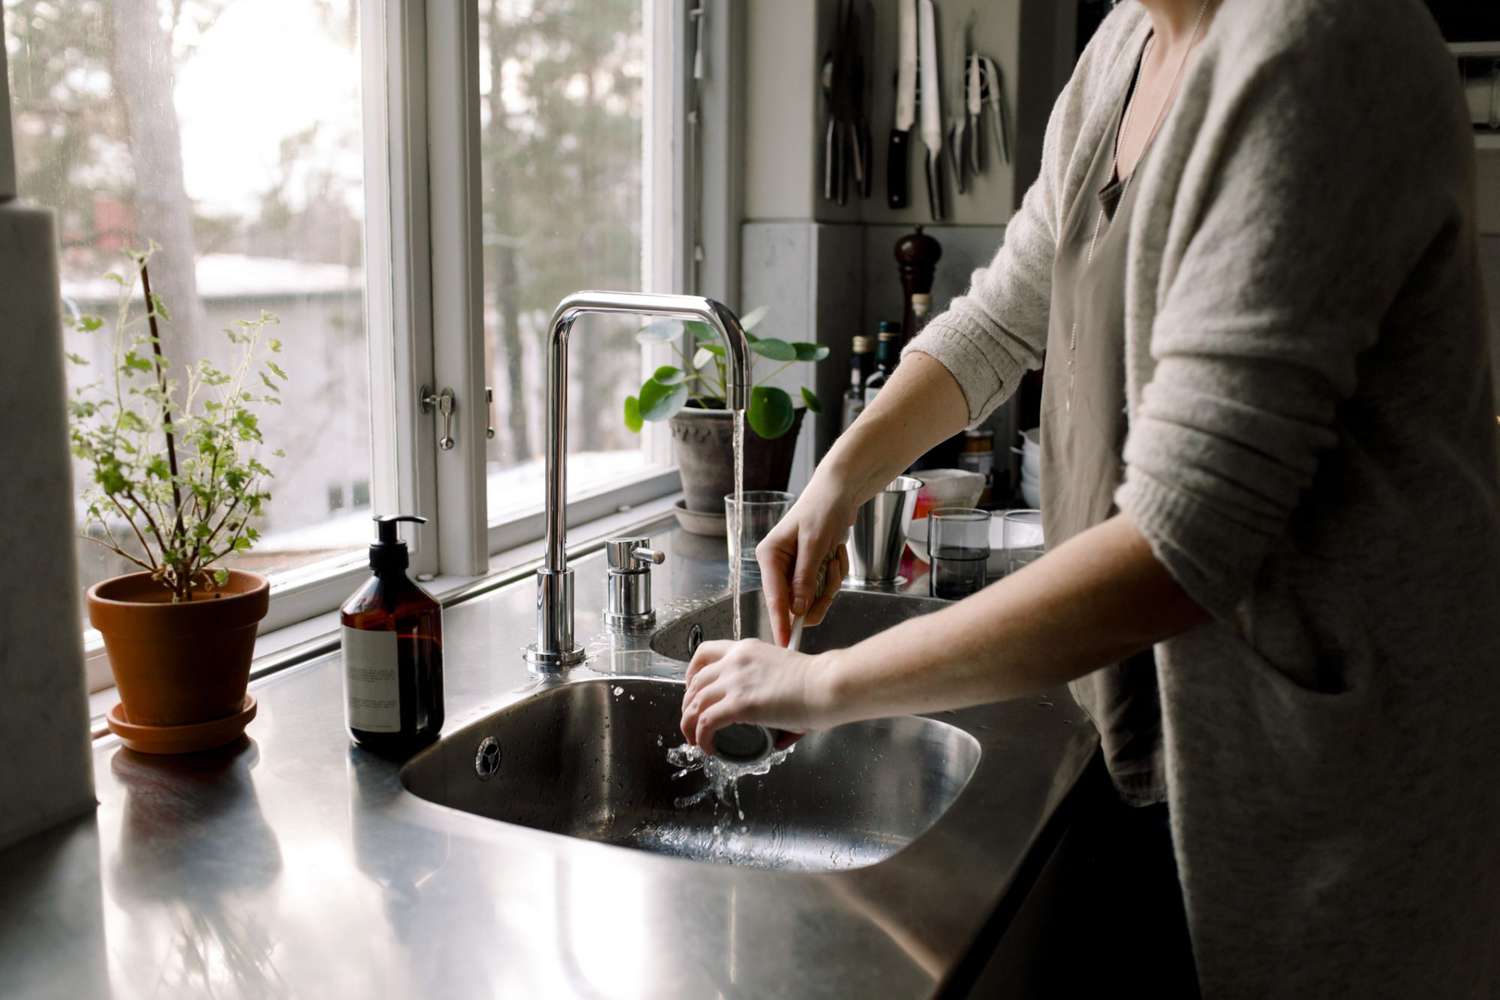 Woman Washing Dishes at Sink